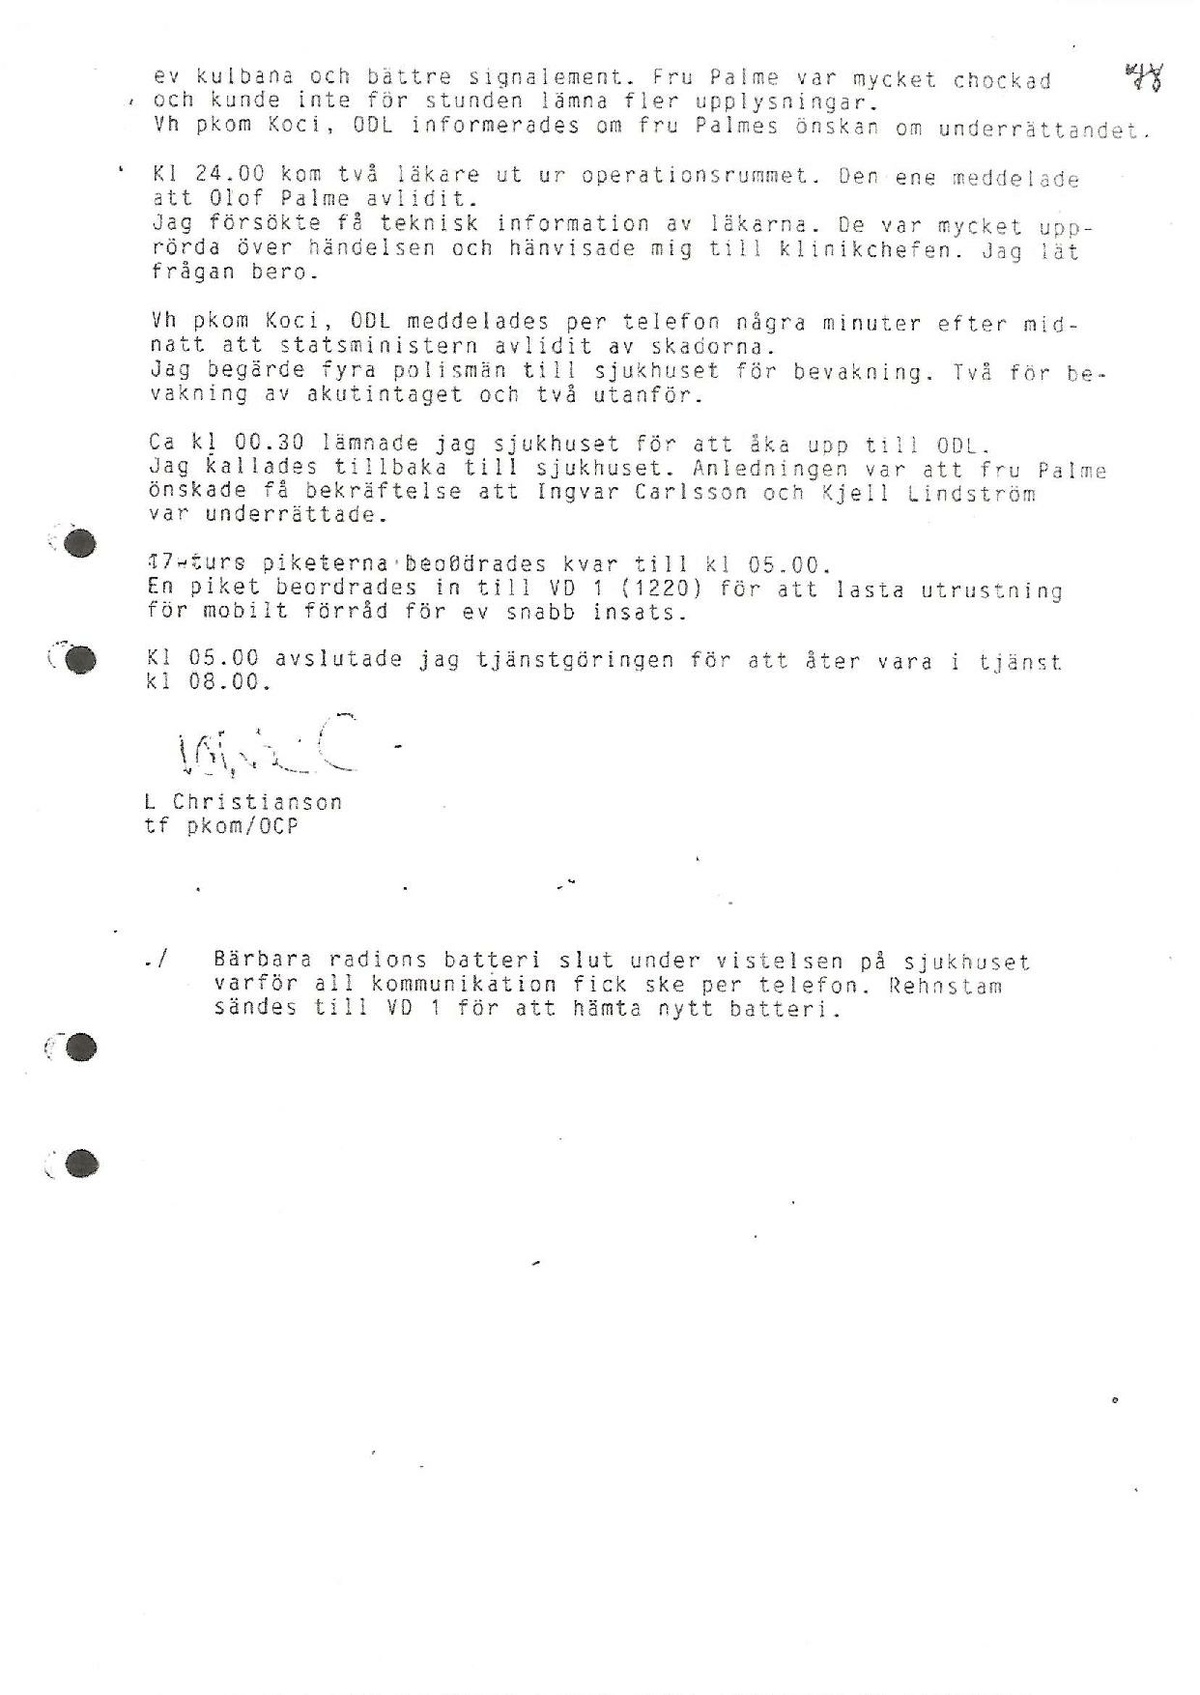 Pol-1986-03-24 A14093-00-A Lars Christiansson rb 1210.pdf